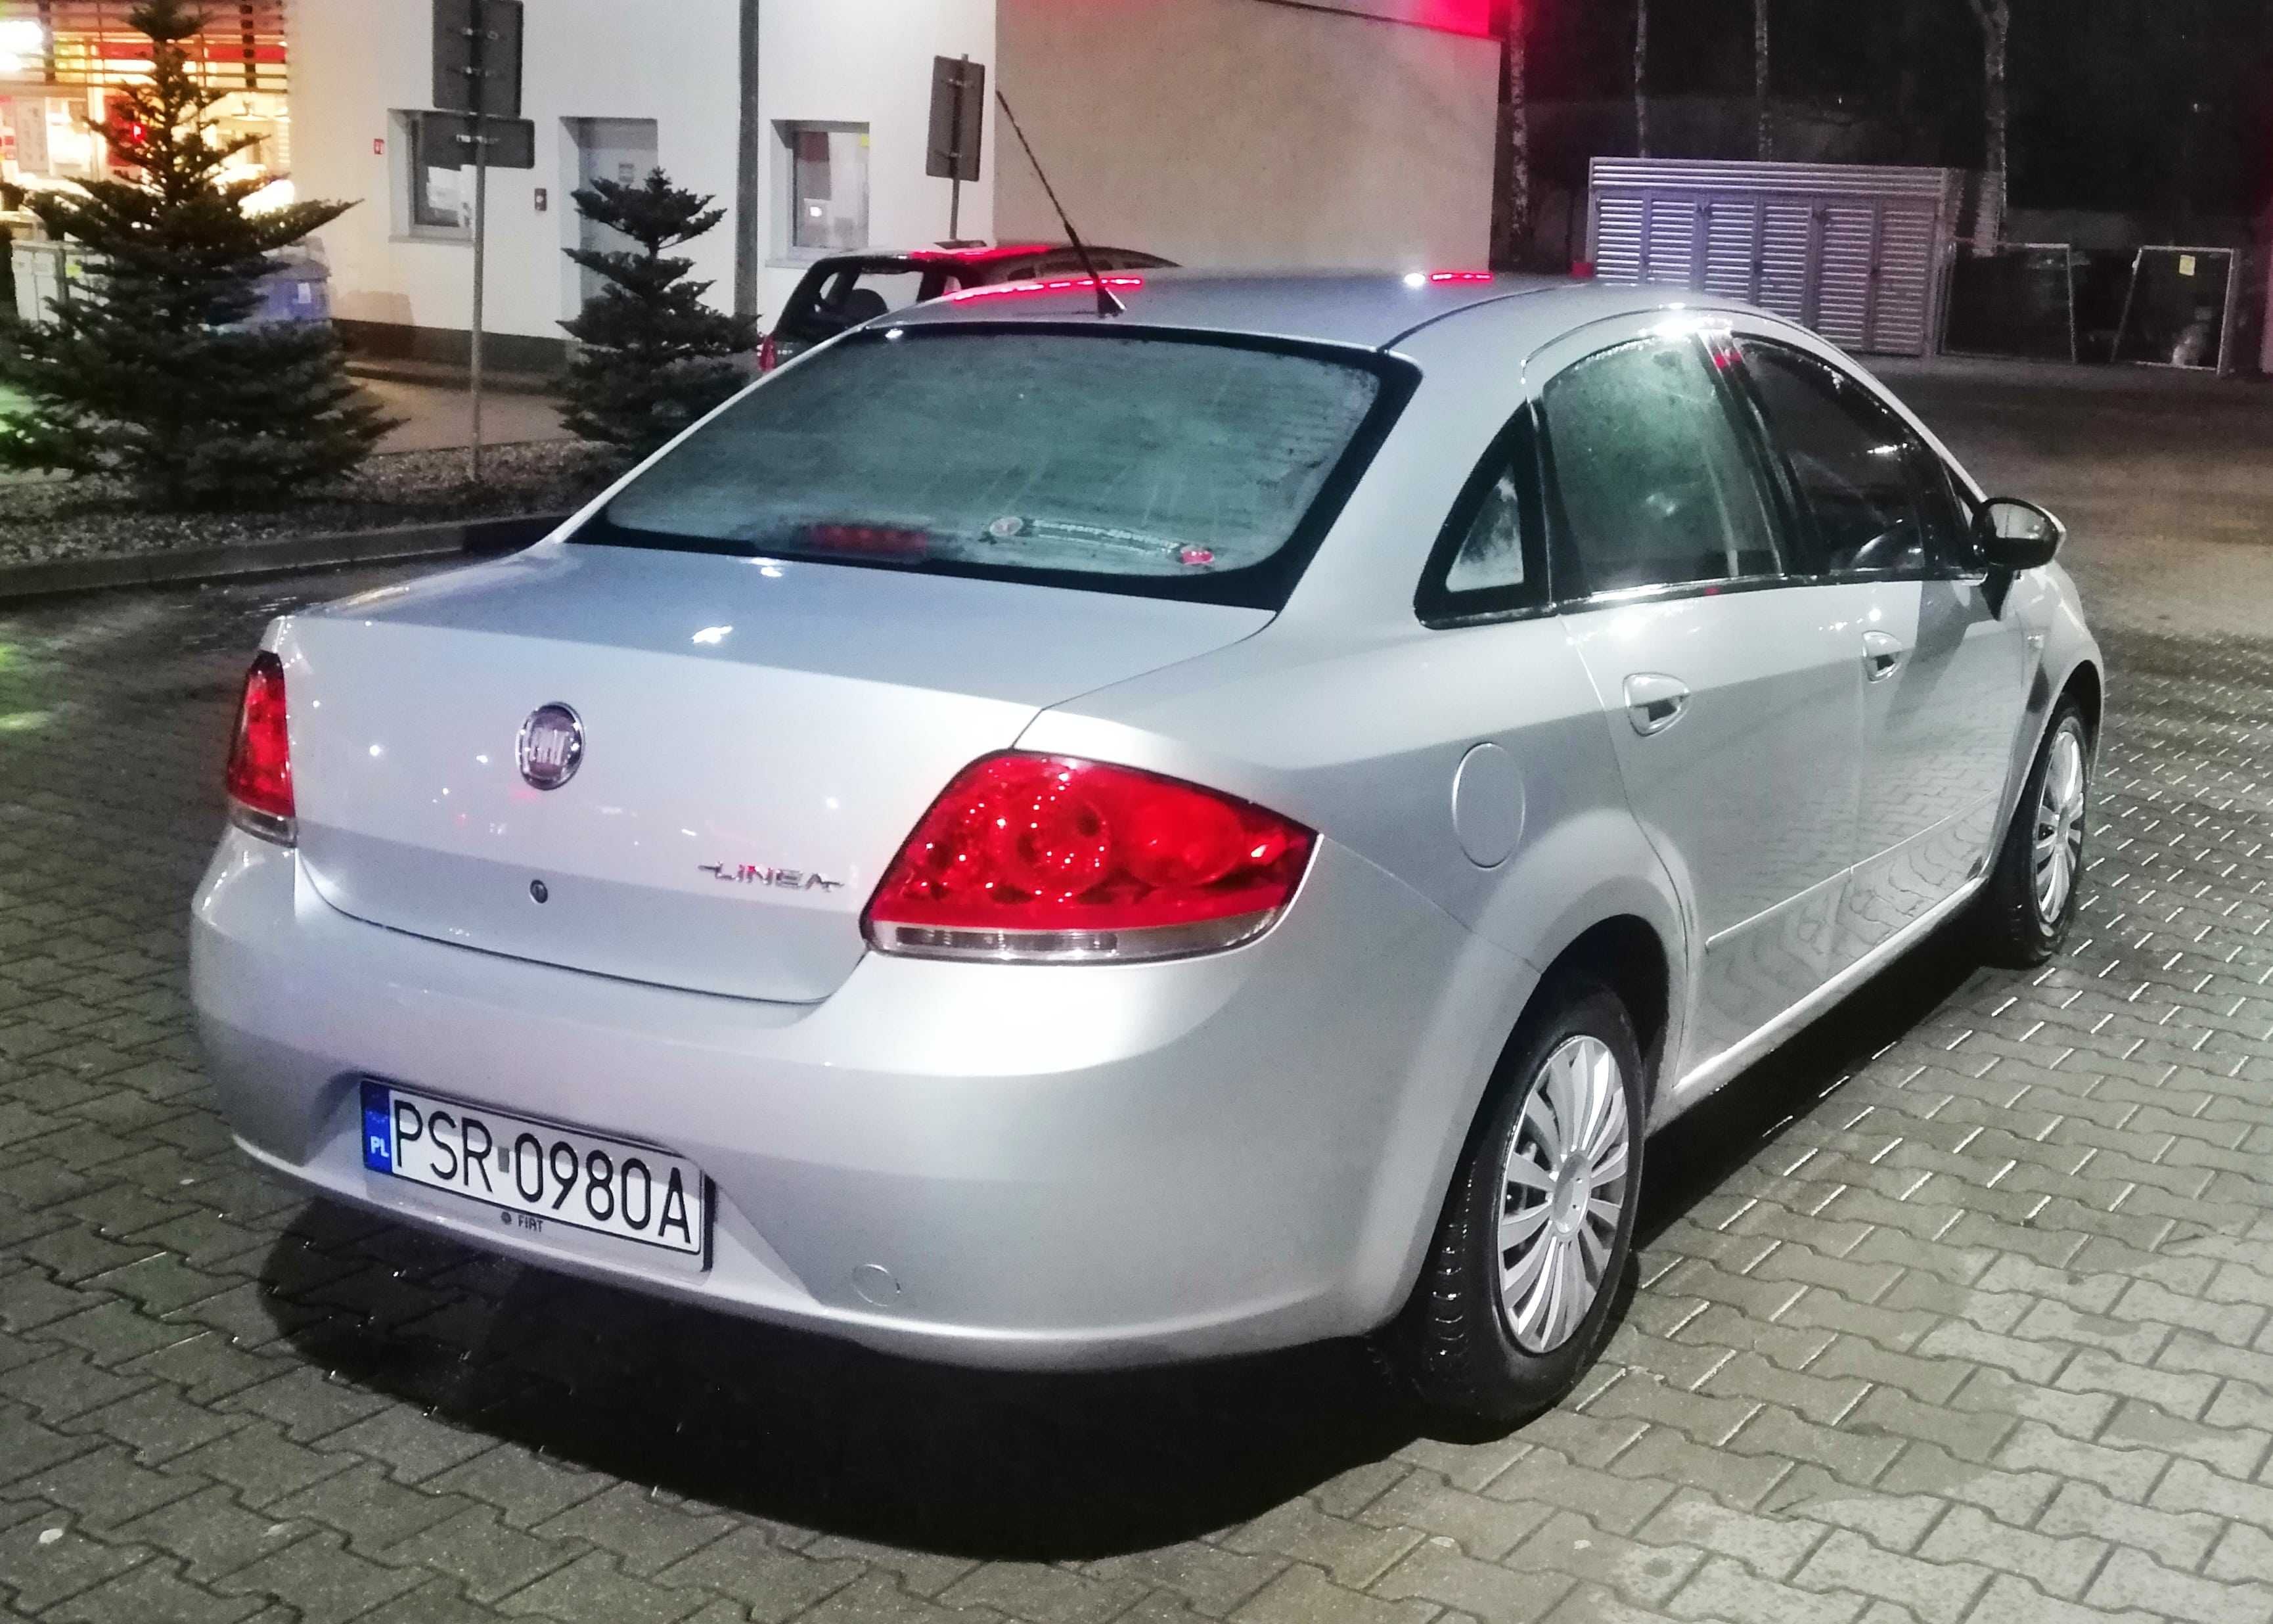 Fiat Linea 1.4 / benzyna / sedan / polski salon